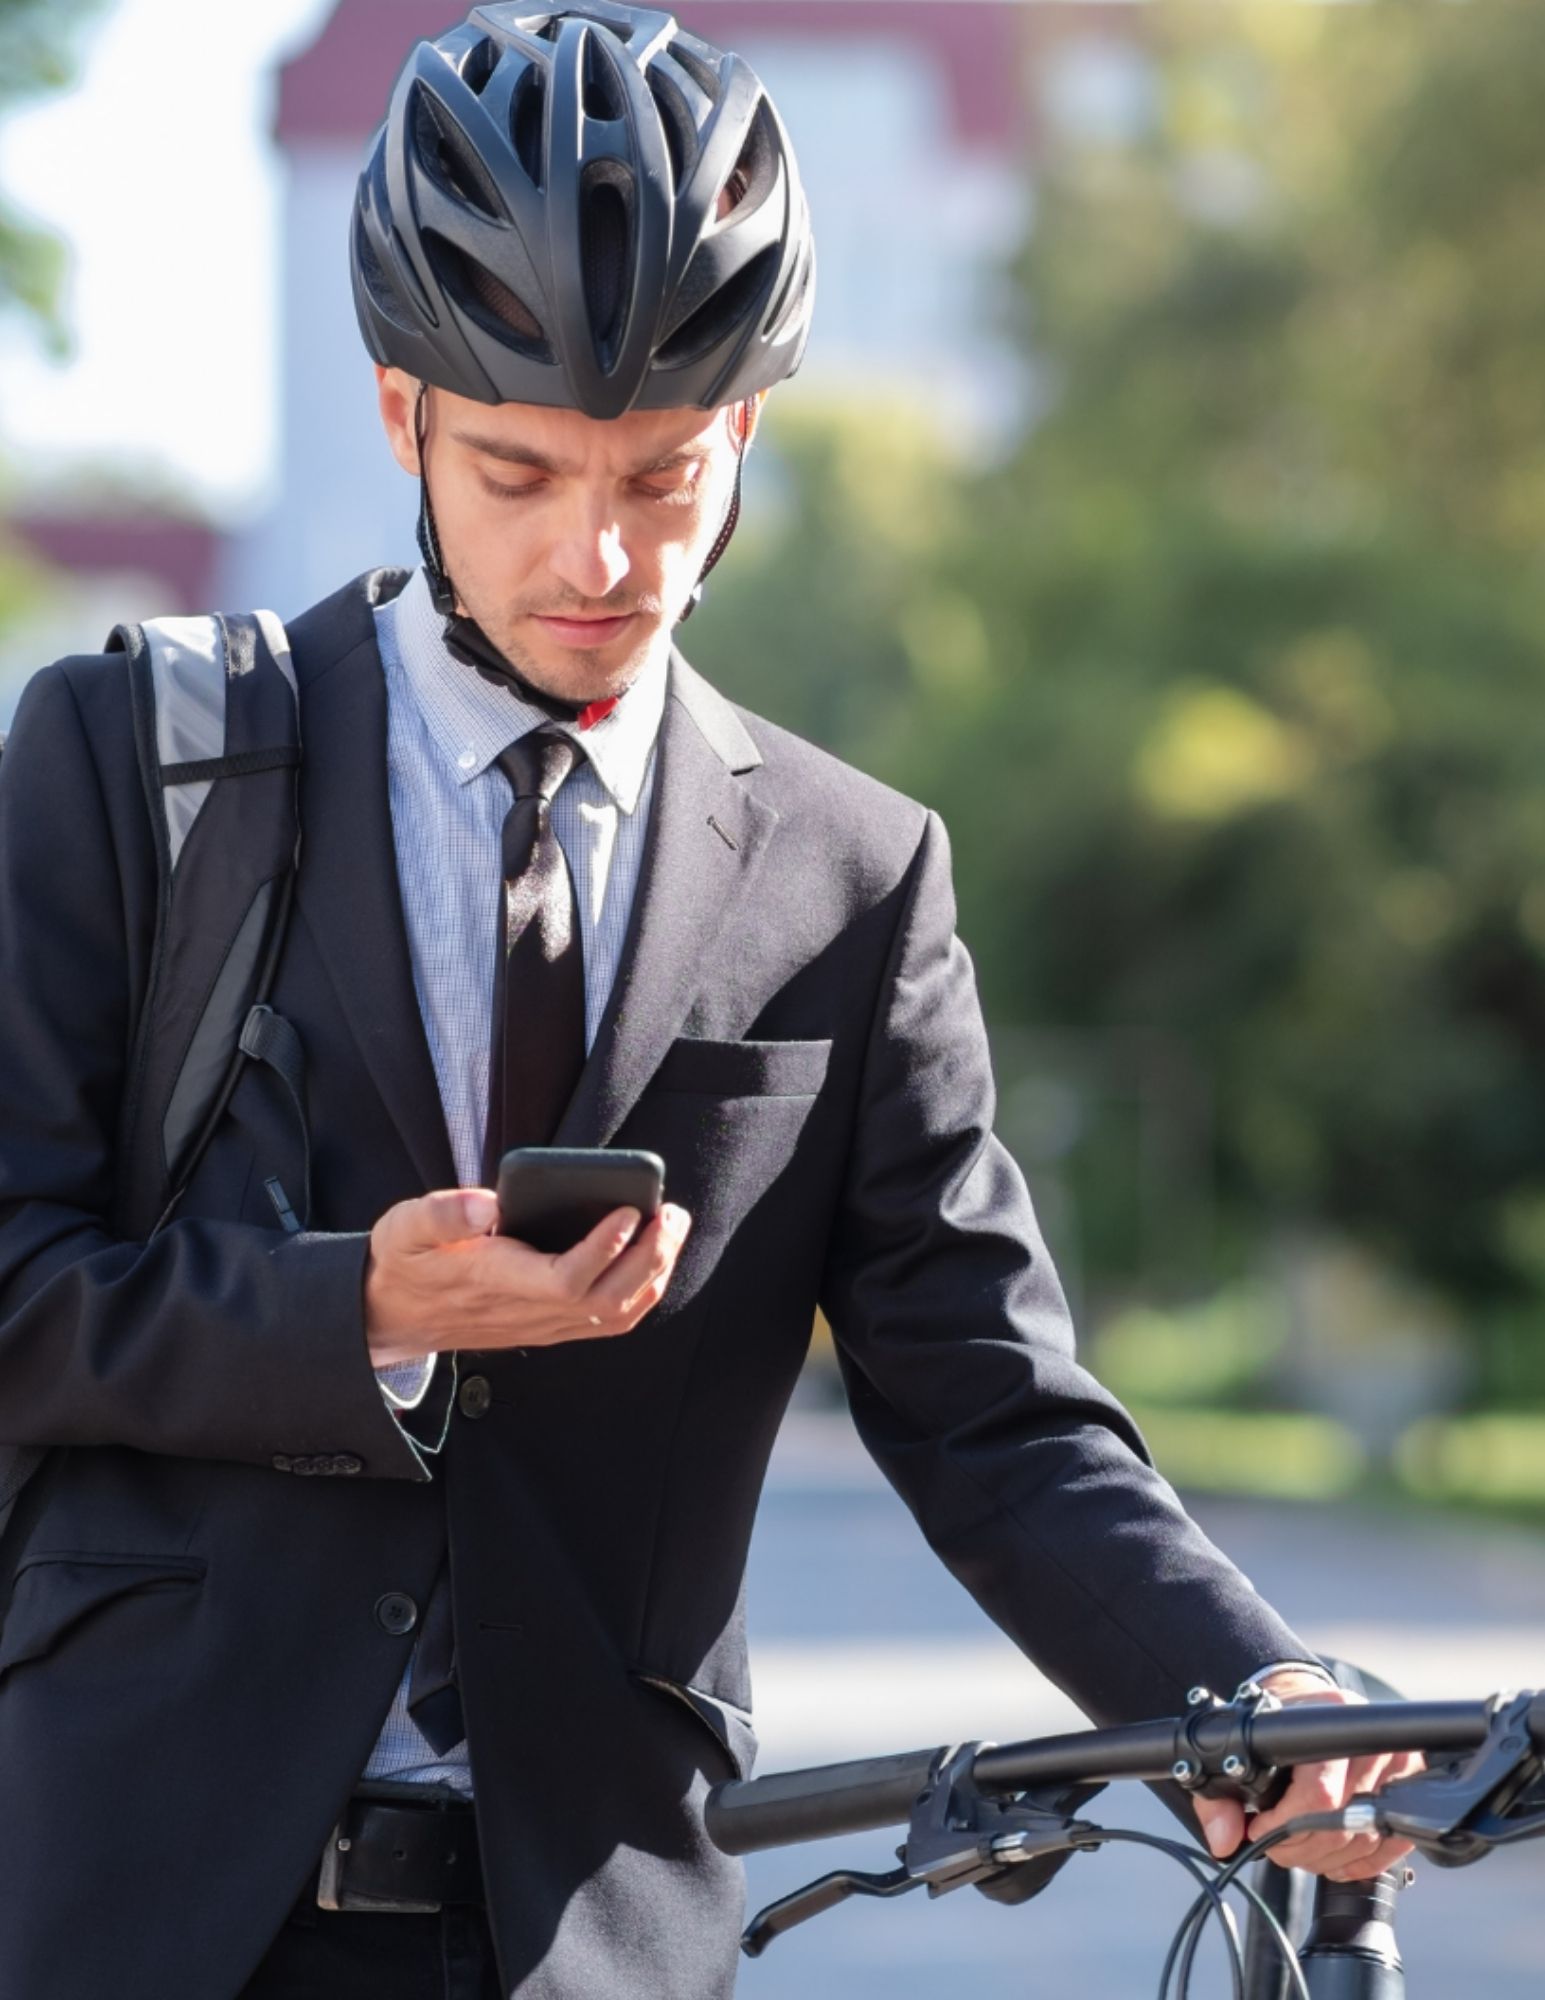 guy on phone with bike